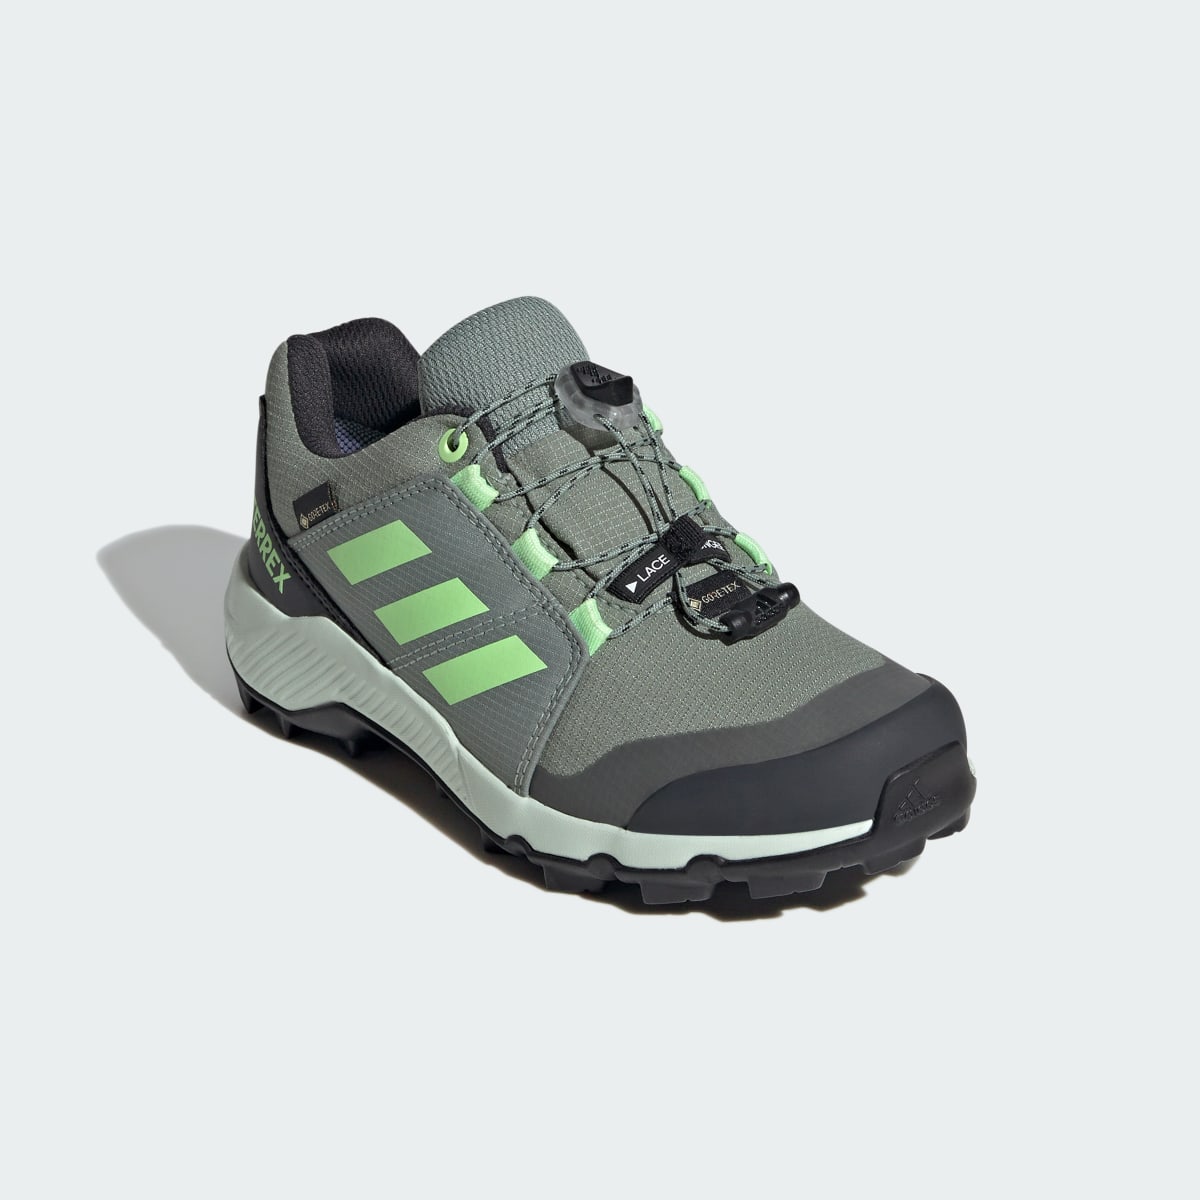 Adidas Terrex GORE-TEX Hiking Shoes. 5